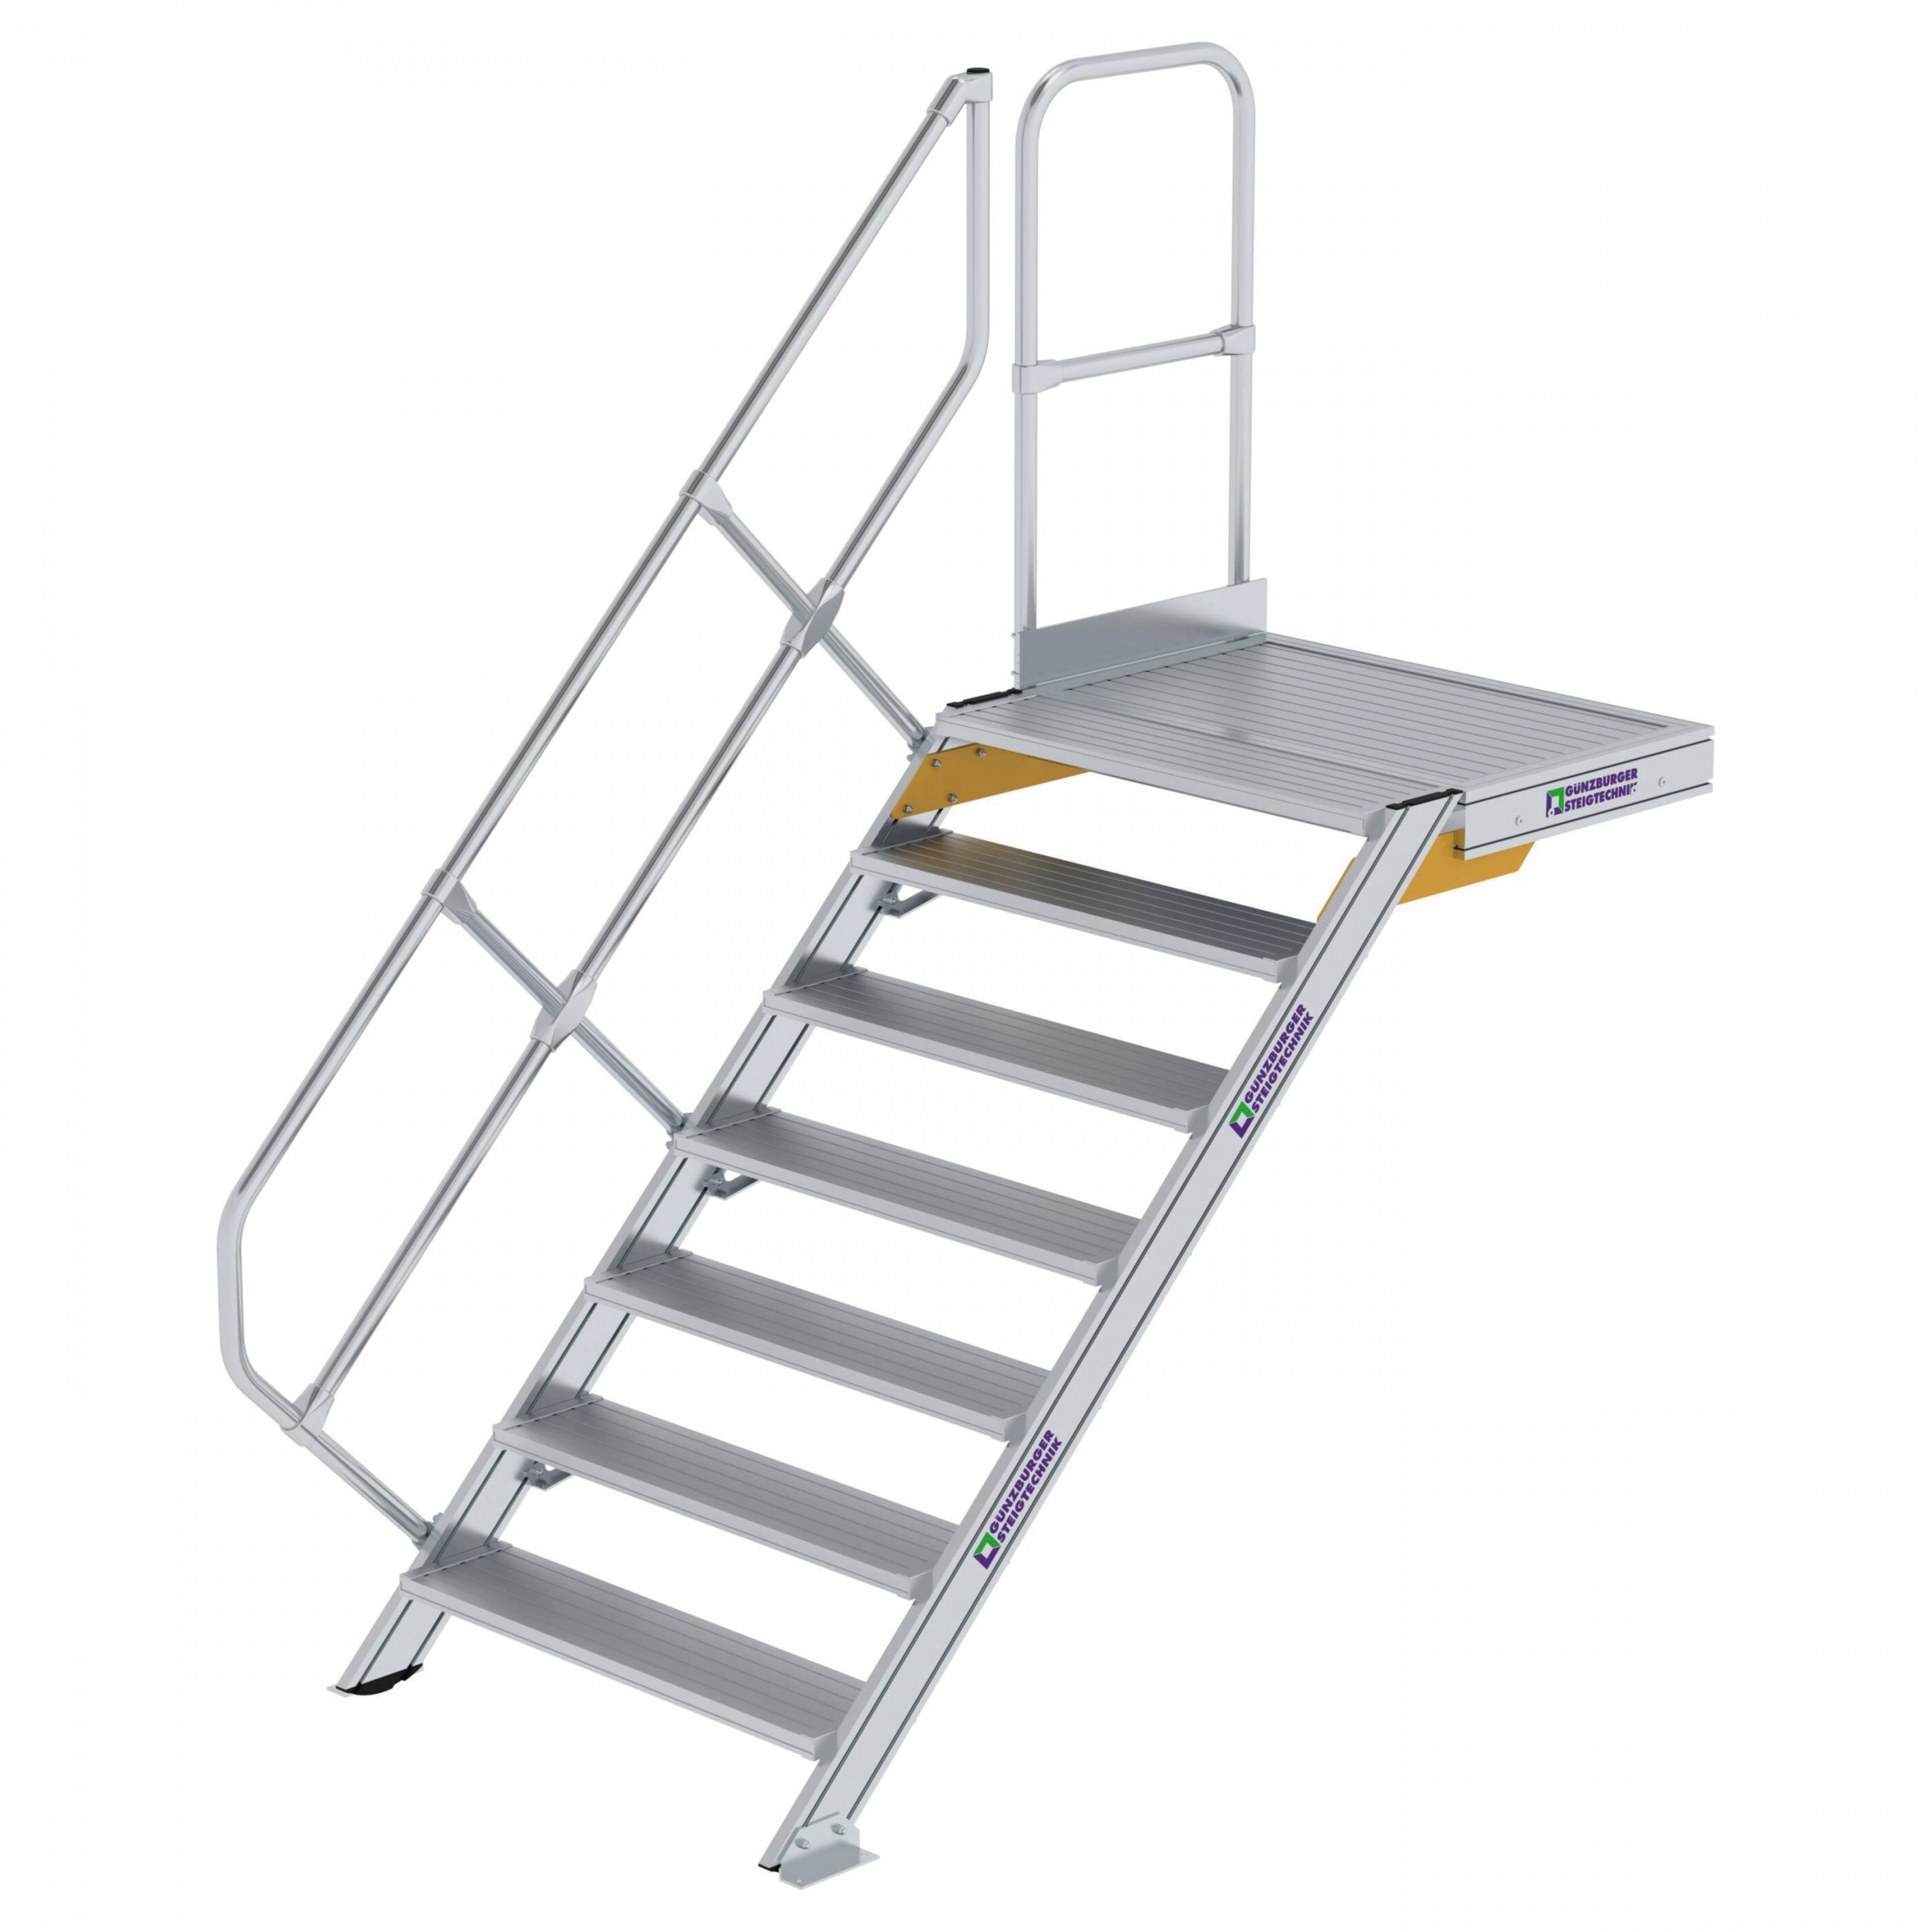 Aluminium-Treppe mit Plattform, 45°, Stufenbreite 1000 mm, 5 Stufen